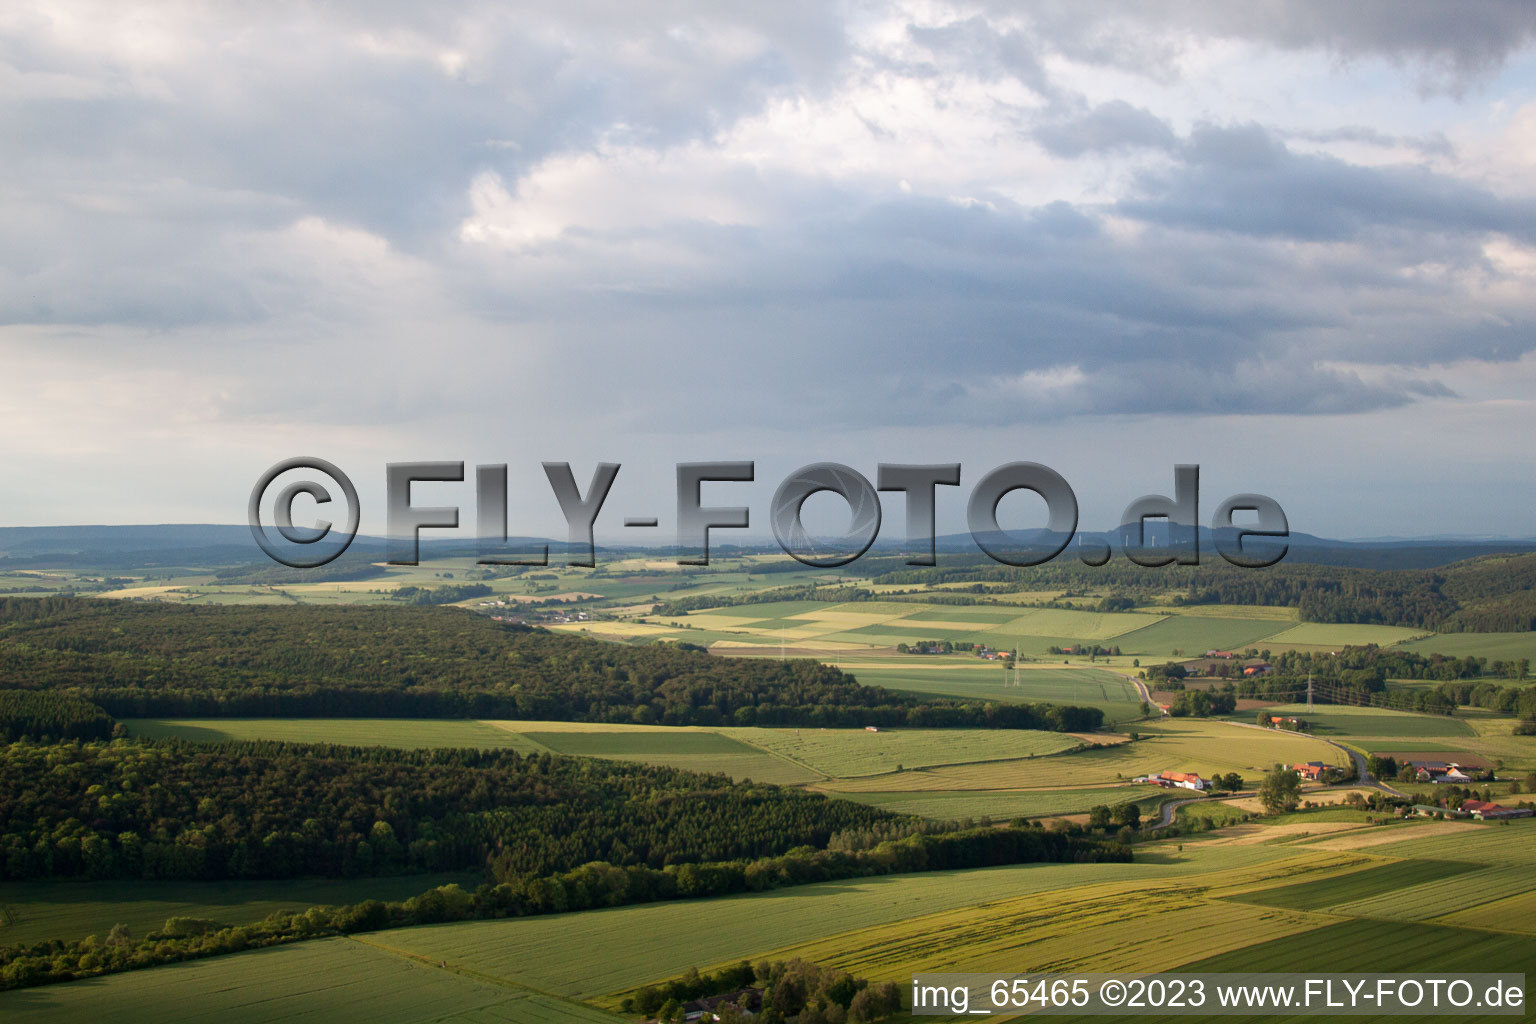 Brakel in the state North Rhine-Westphalia, Germany seen from above